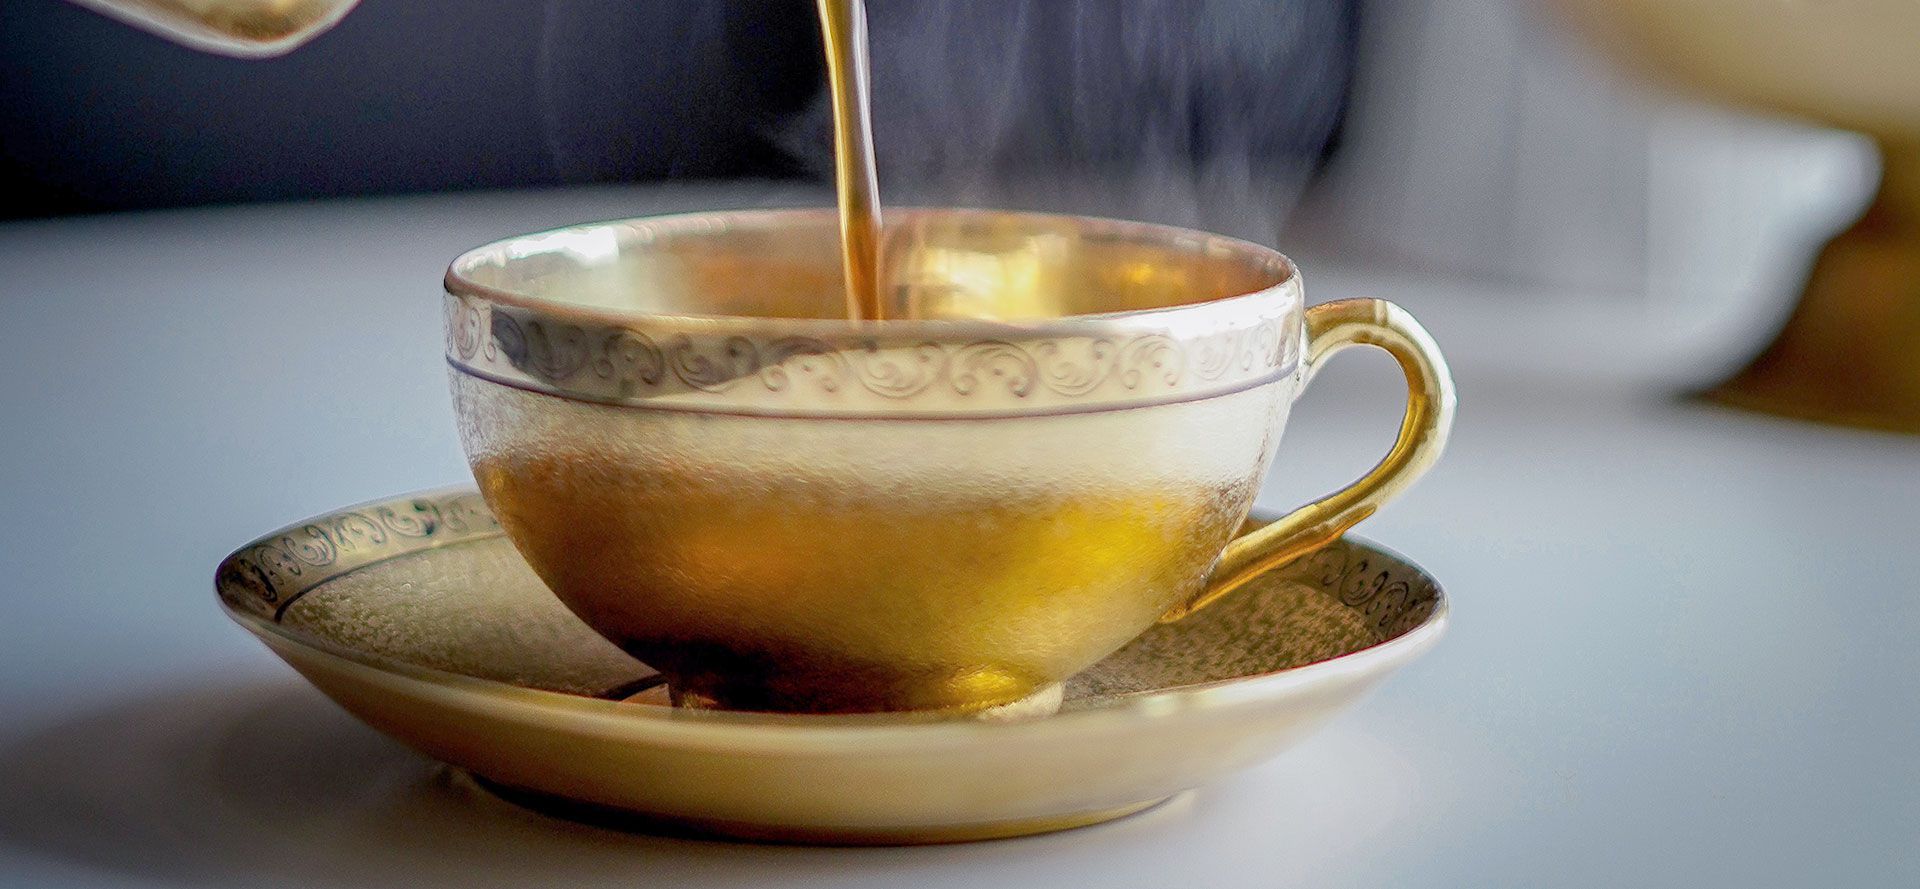 Indian Tea In A Copper Cup.